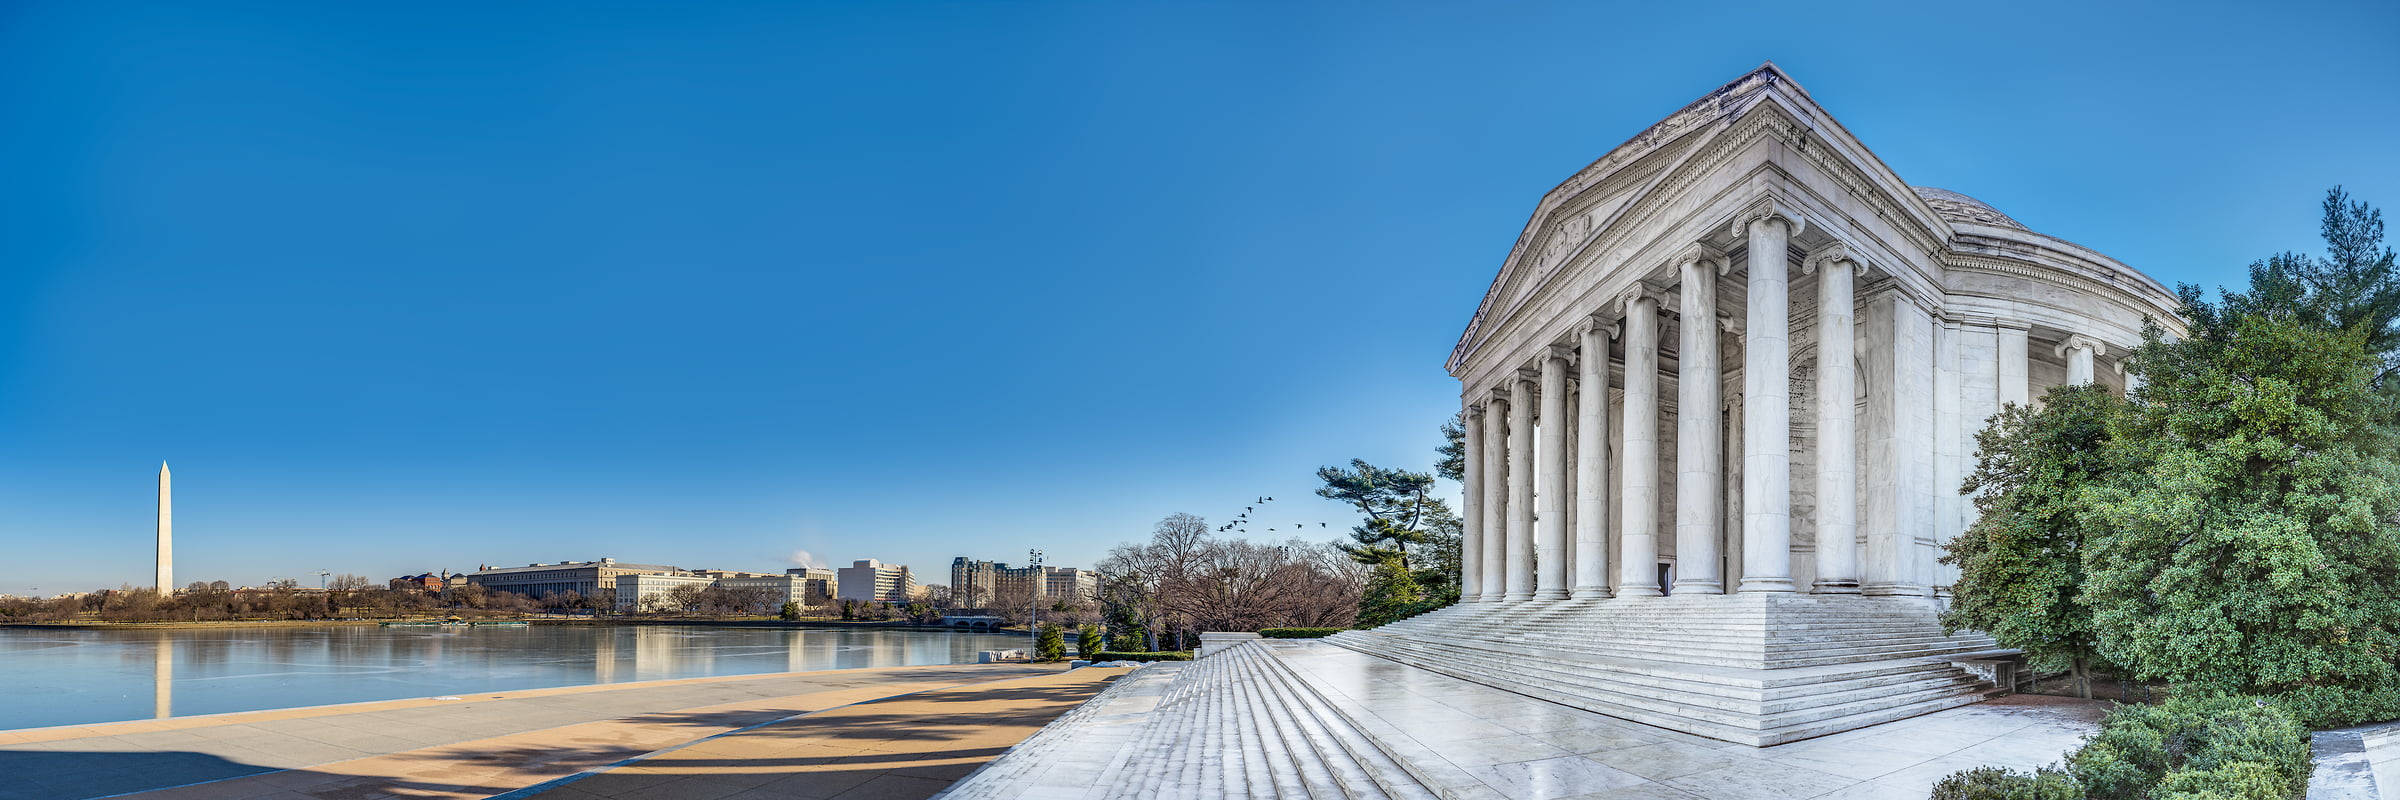 Jefferson Memorial Panoramic Shot Background